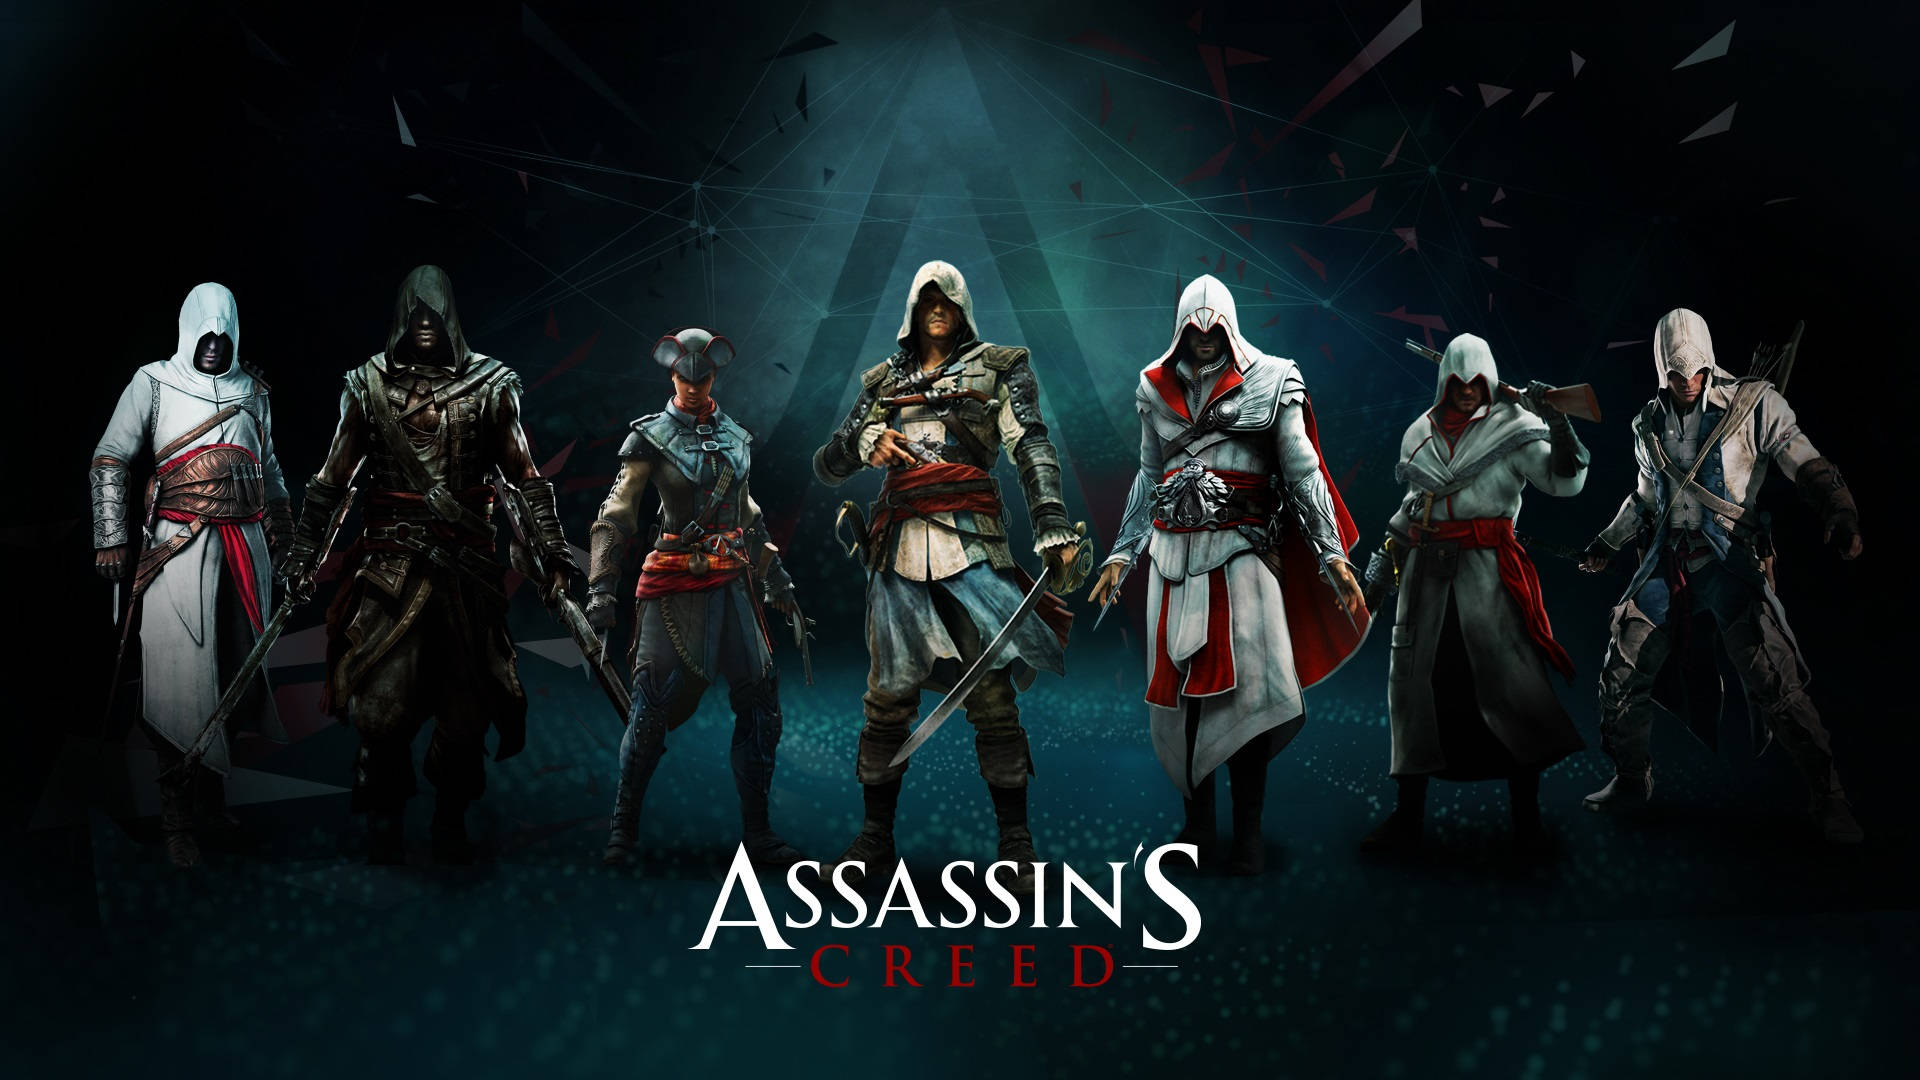 Assassin's Creed Black Flag Character Transformation Wallpaper